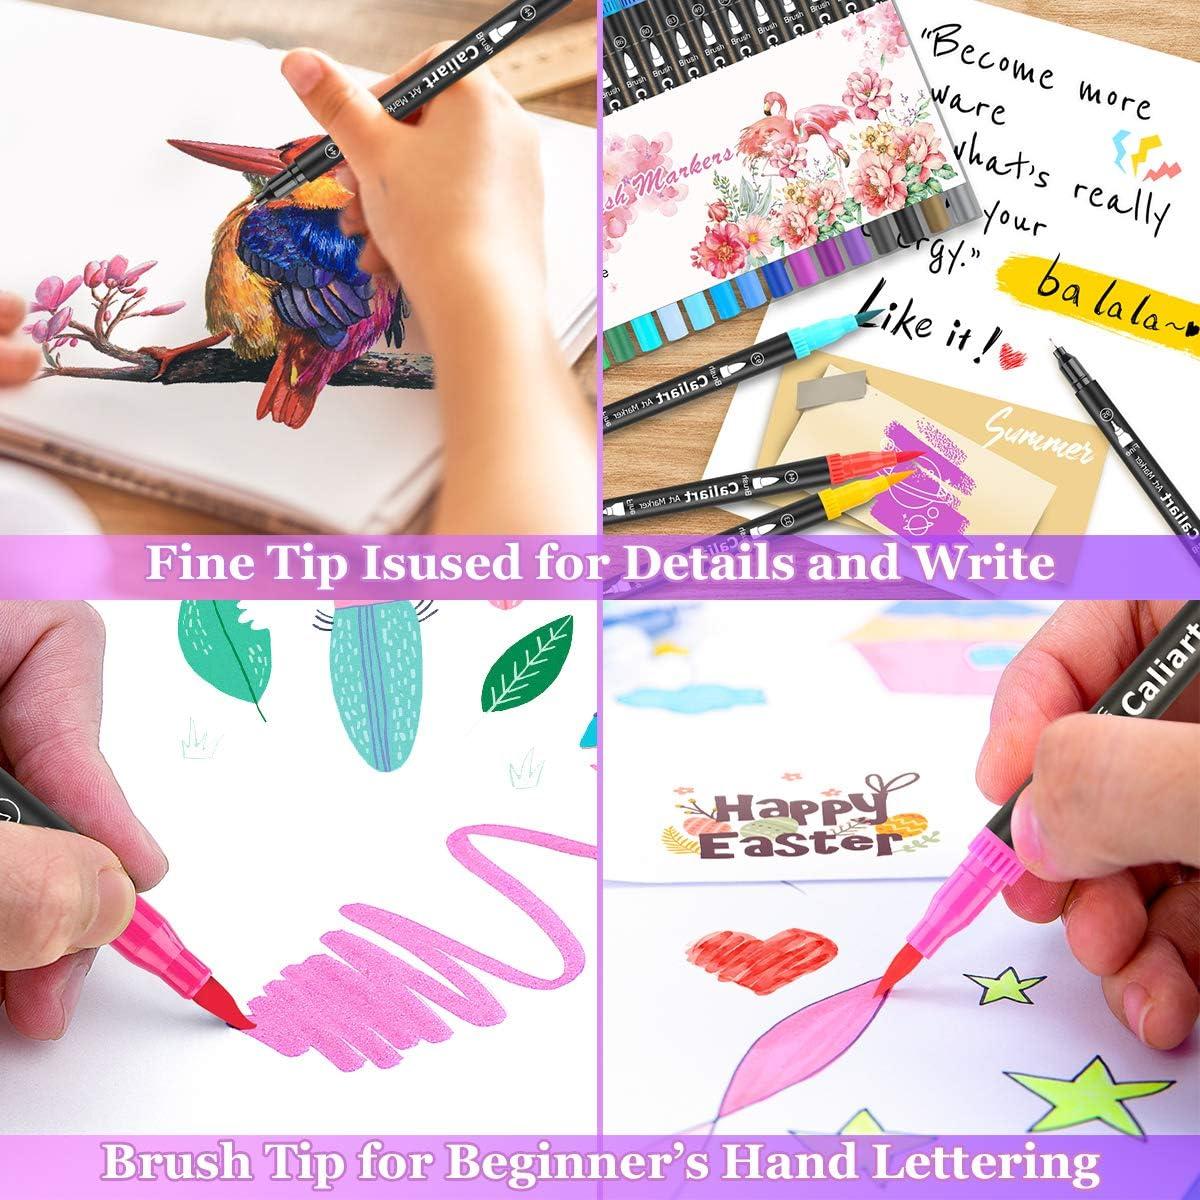 Deluxe DIY Kit Set - Hand Lettering, Calligraphy, Watercolor, Brush